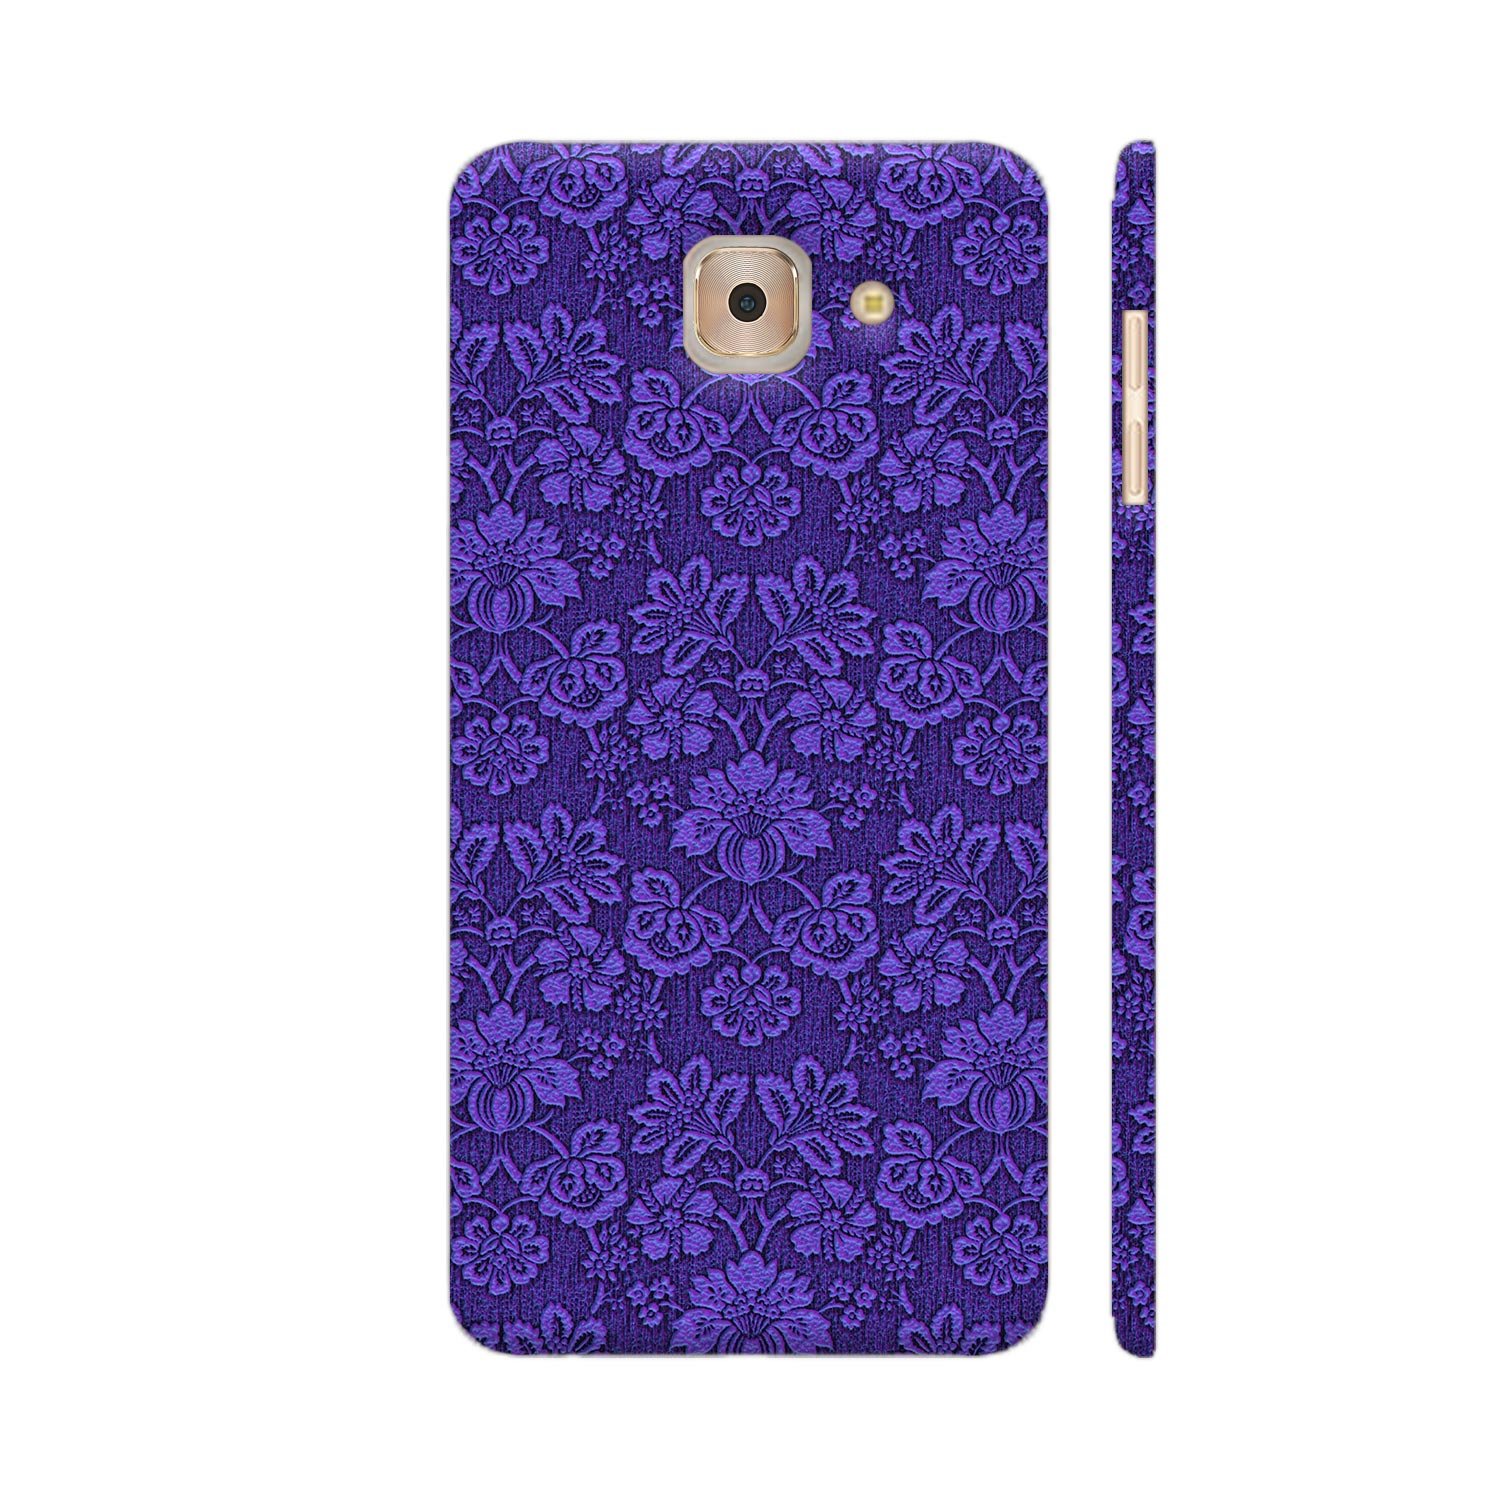 samsung j7 wallpaper,mobile phone case,violet,purple,electric blue,technology